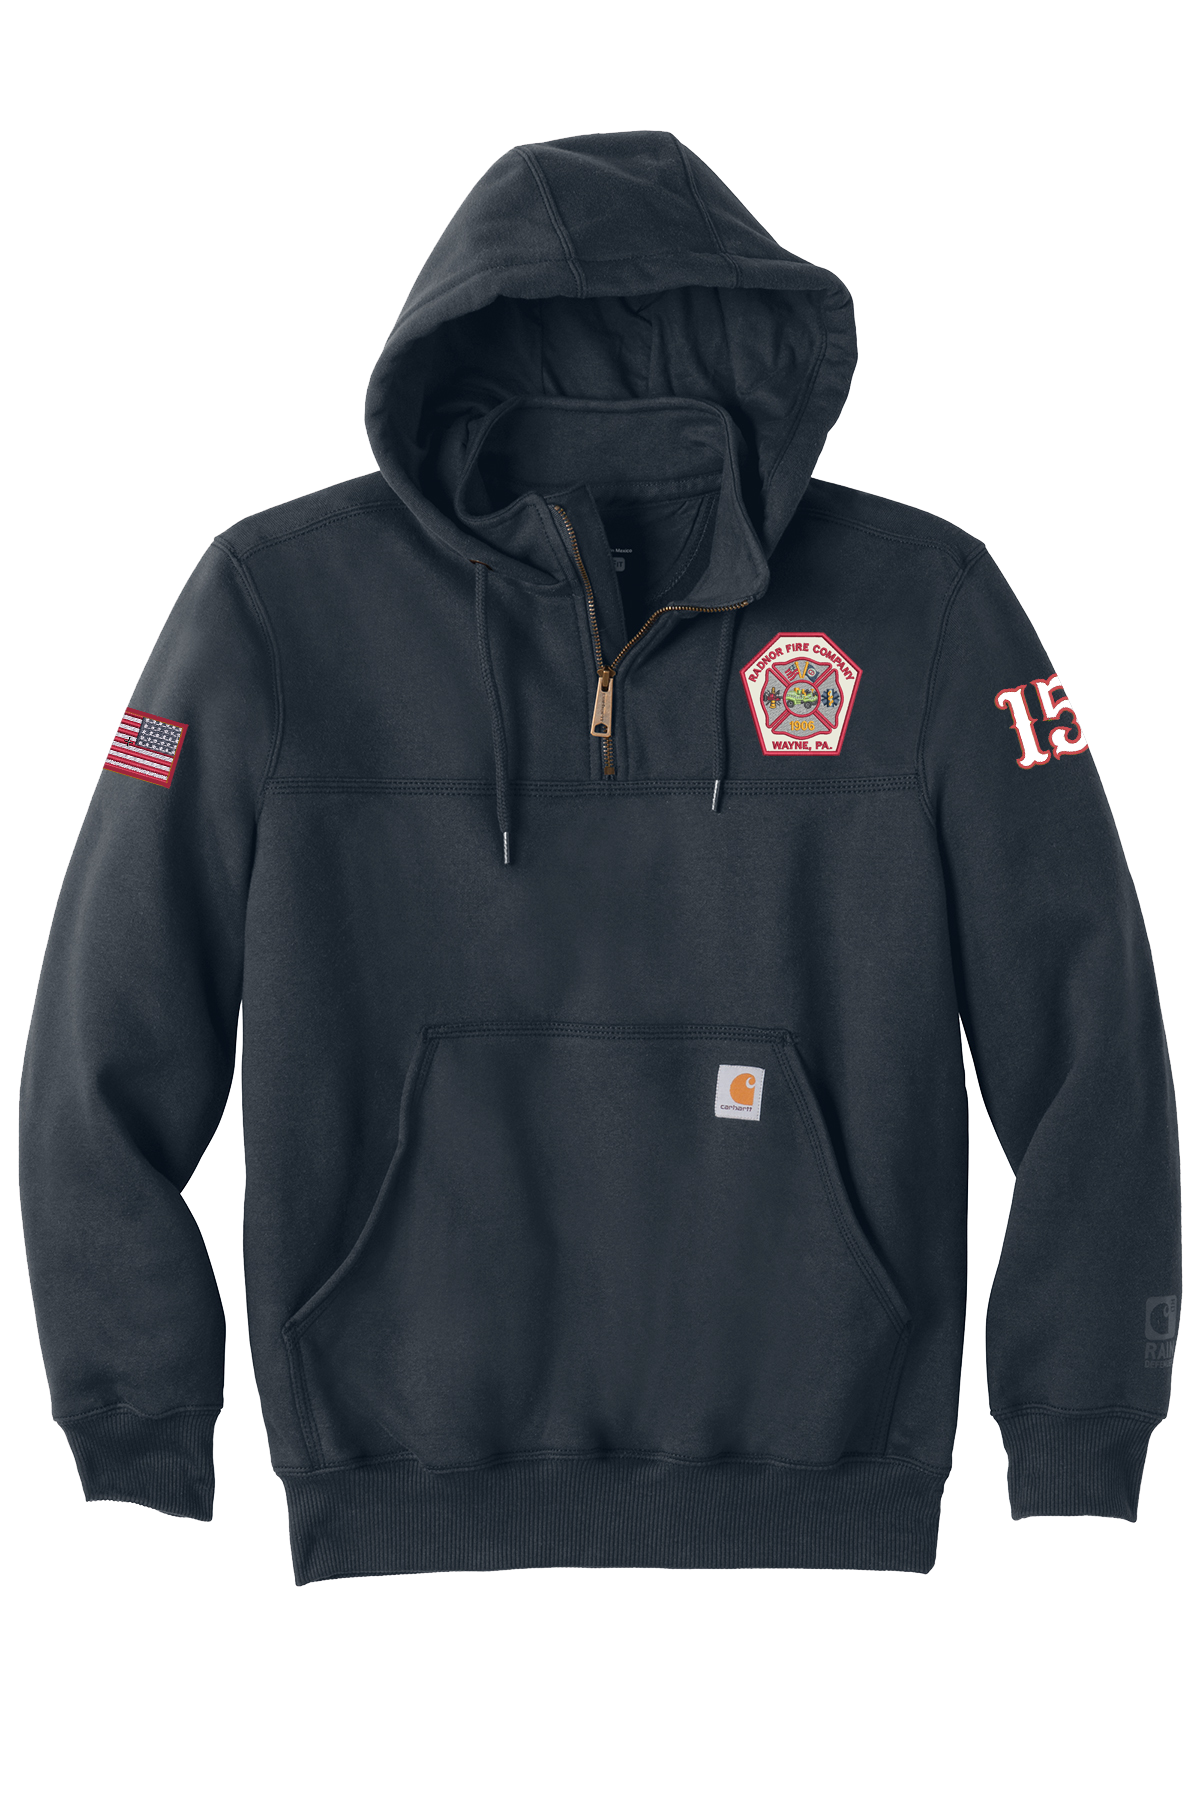 Custom Carhartt Rain Defender Paxton Heavyweight Quarter Zip Hoodie -  Embroidered - Design Quarter Zip Sweatshirts Online at